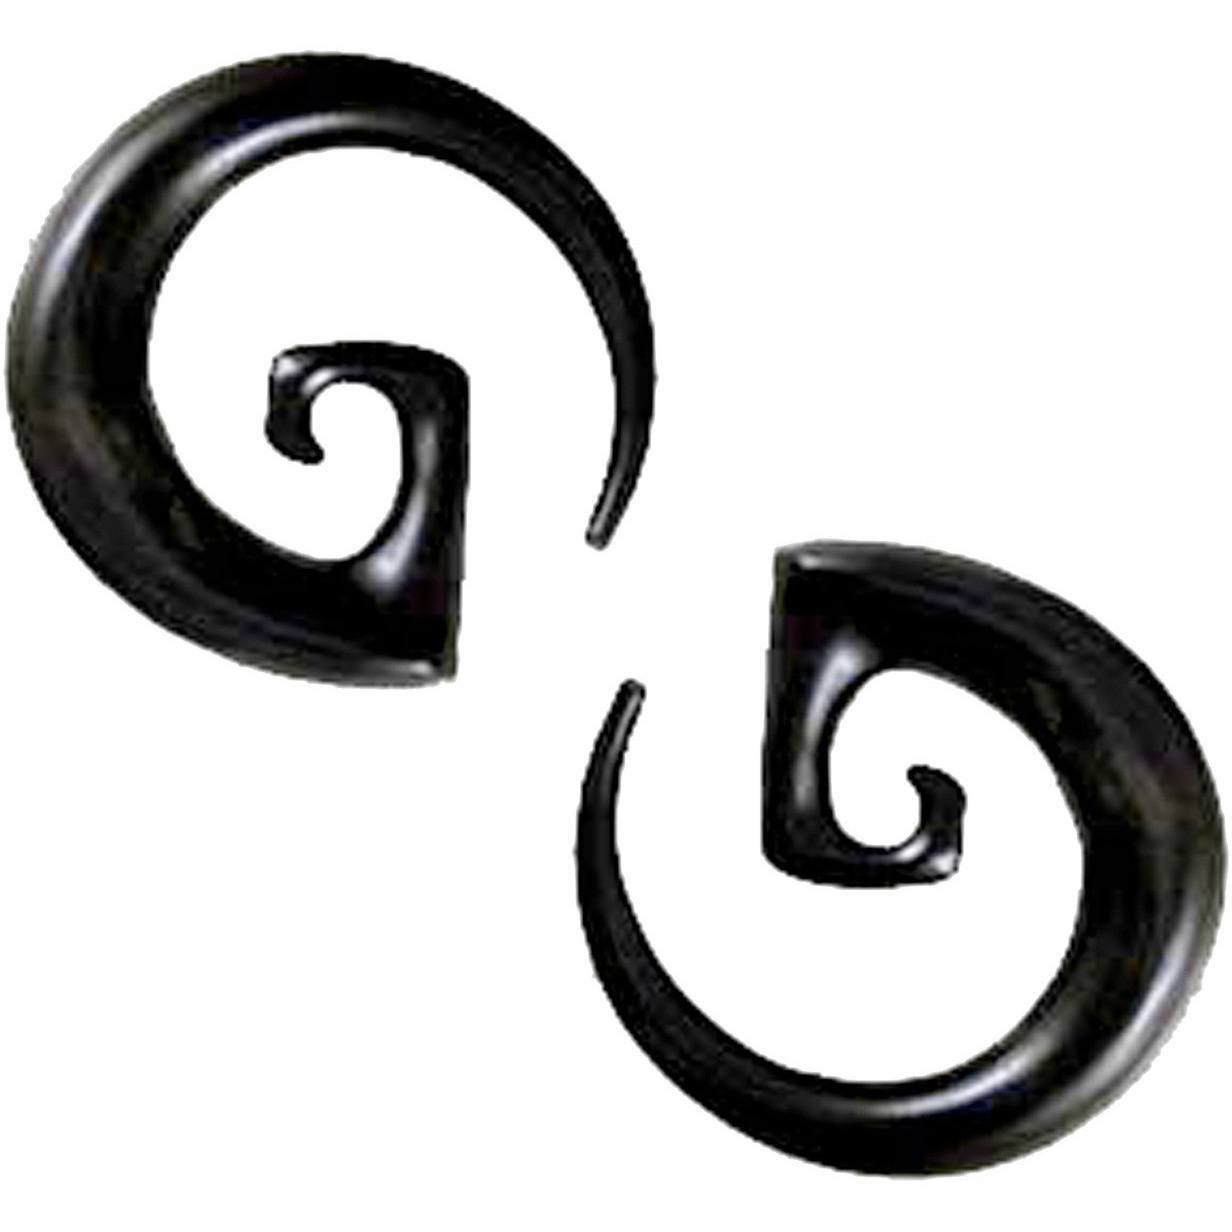 00 Gauge Earrings :|: Bohemian Spiral, black. Horn 00g, Spiral Body Jewelry. | Spiral Body Jewelry